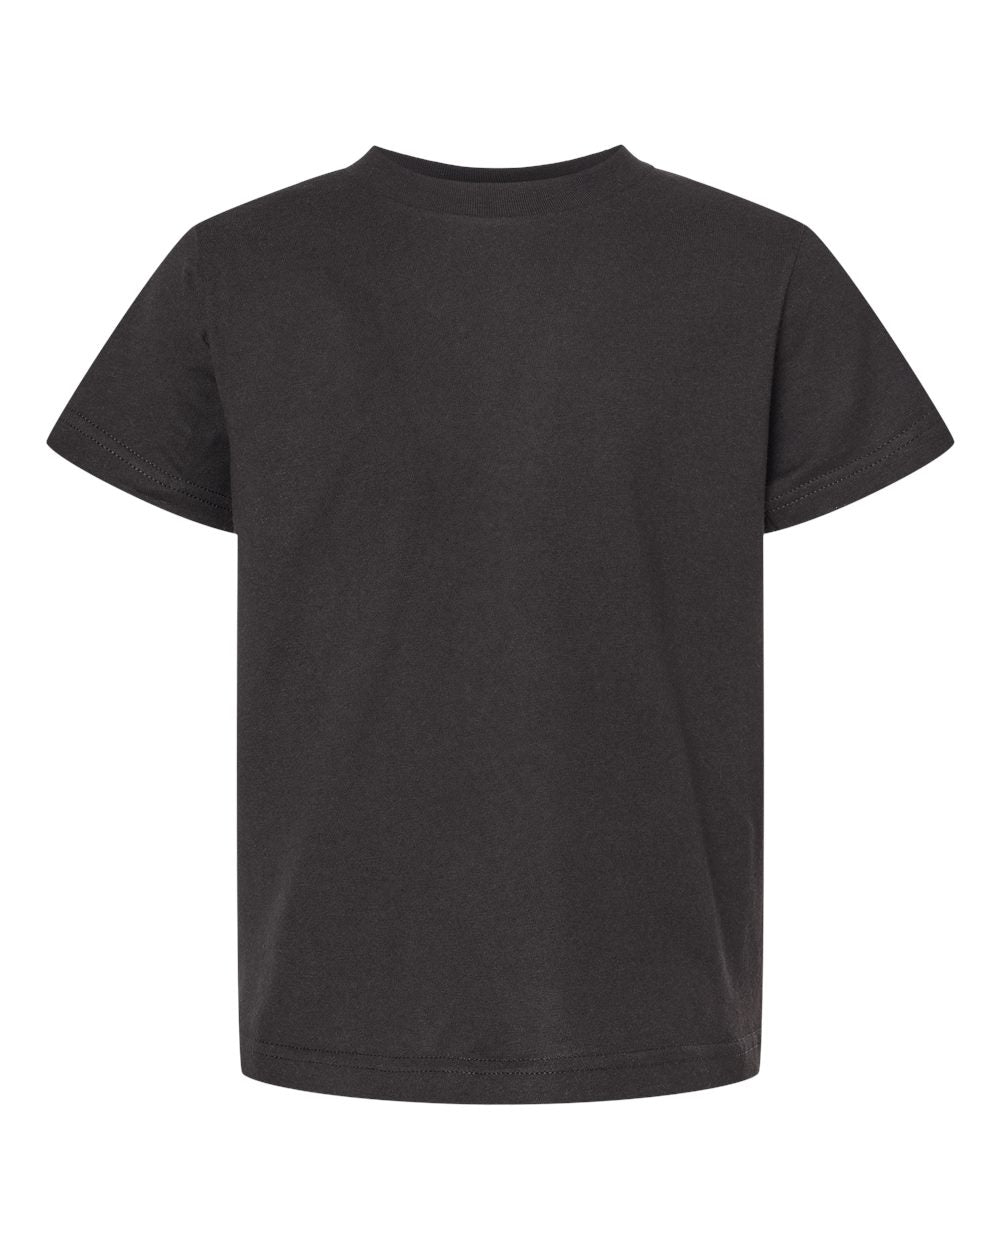 Black - Tultex - Youth T-Shirt 235